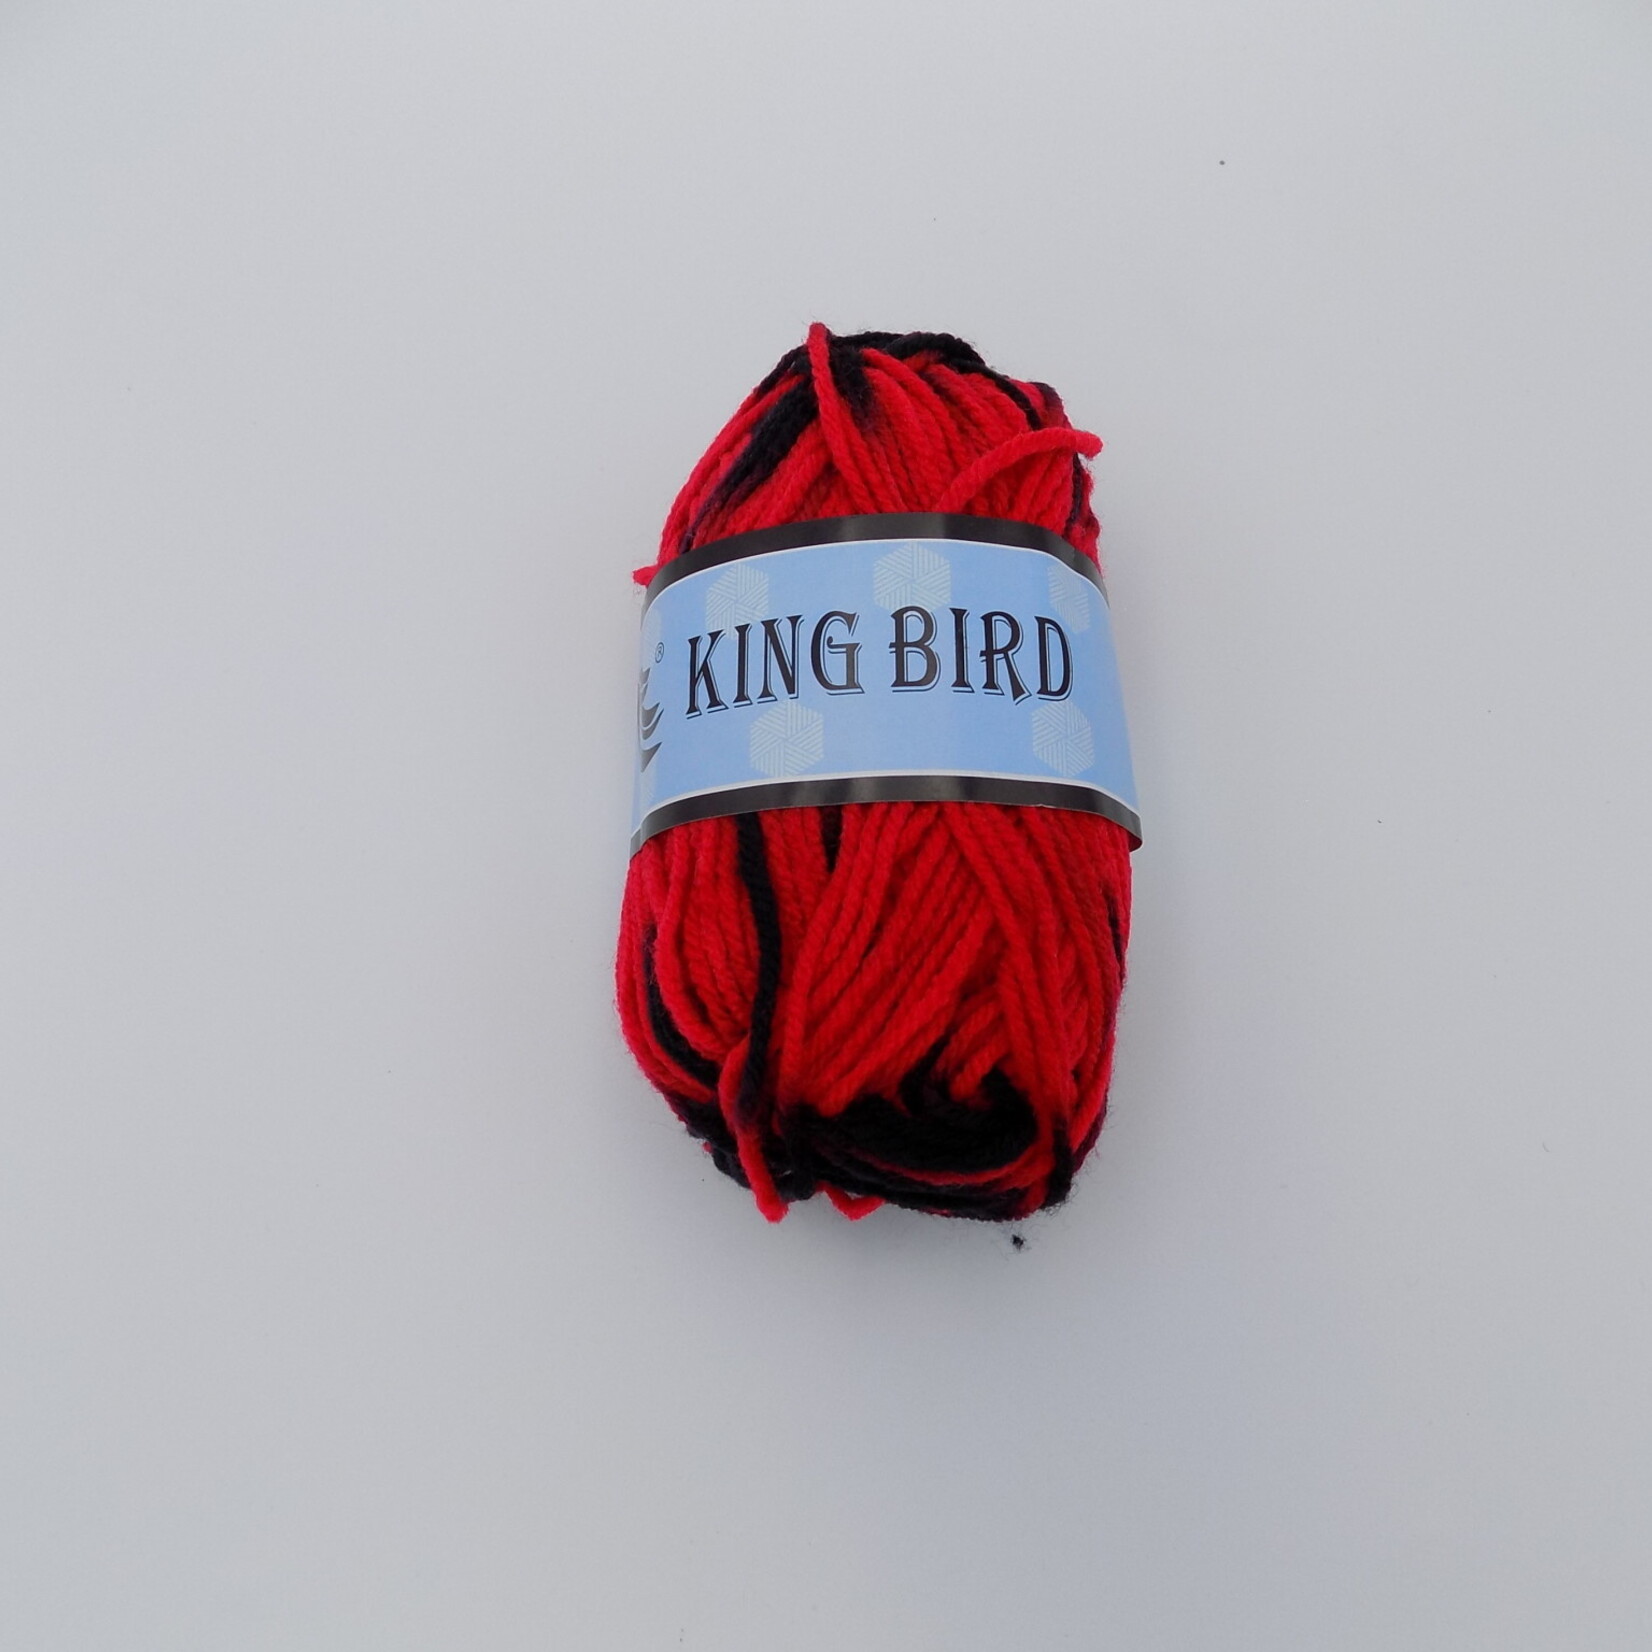 King Bird Variegated Wool 50g Red, Black